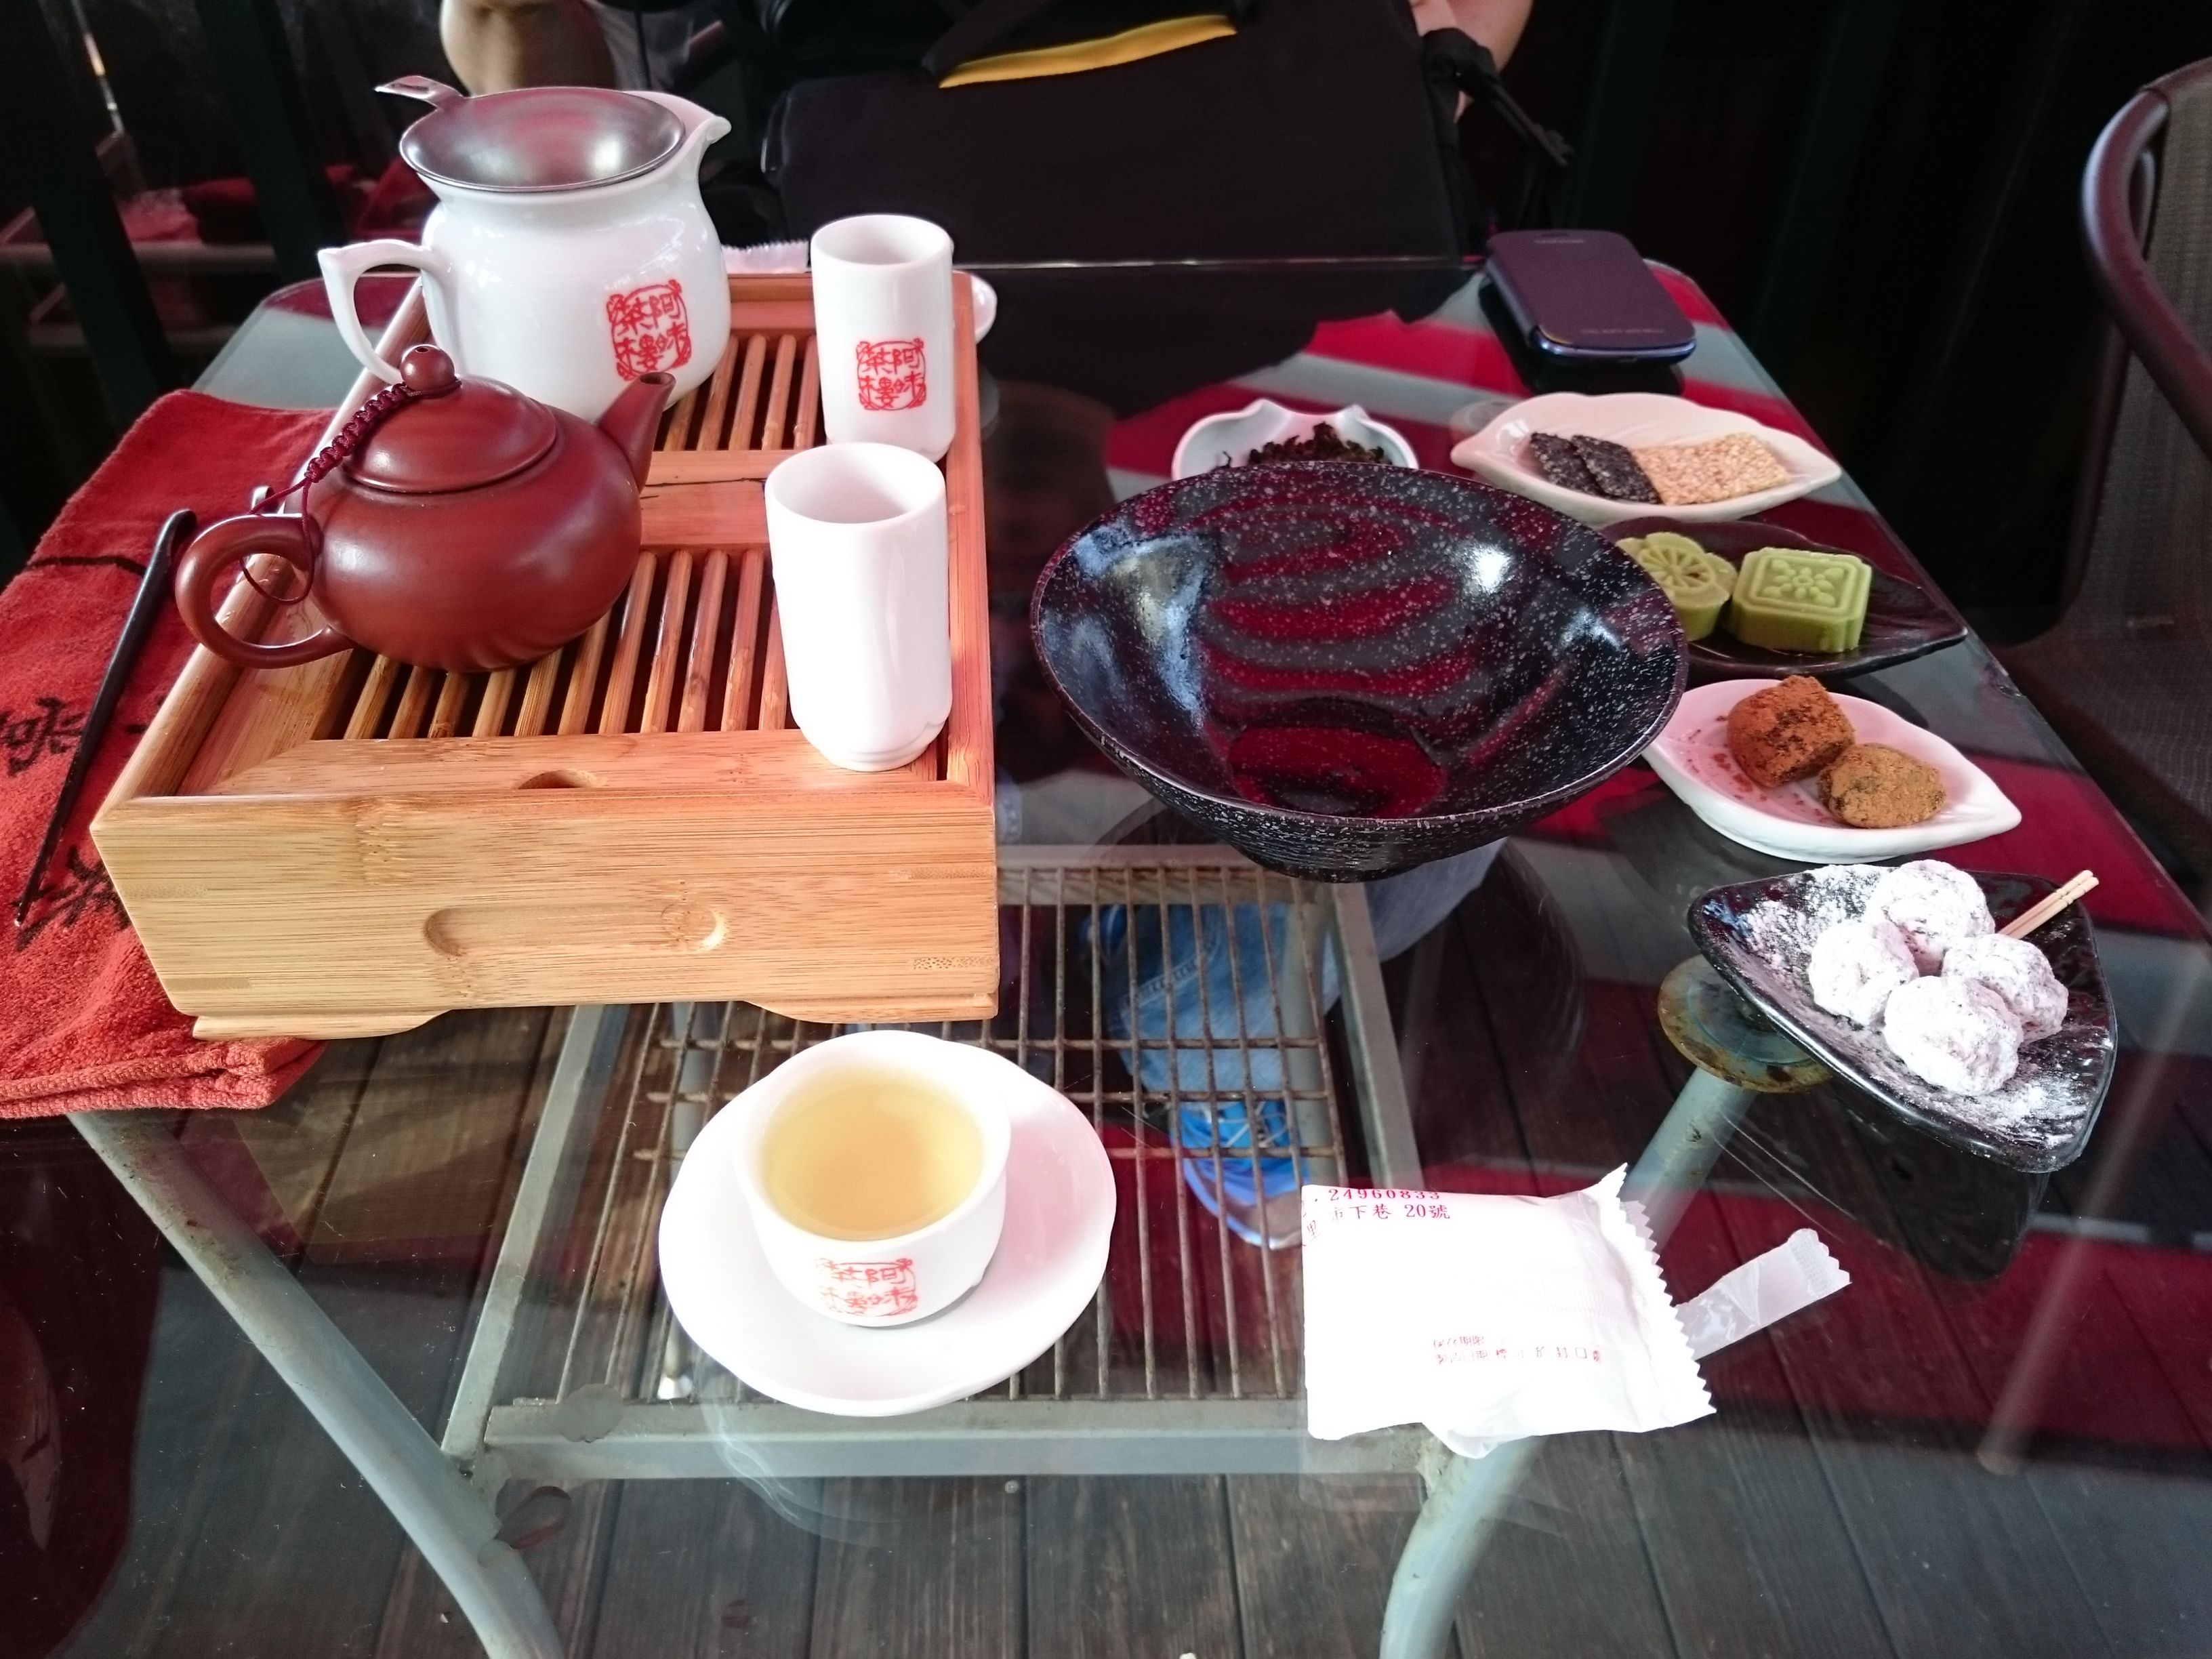 Tea Pots & Tea Sets - Anime Teahouse